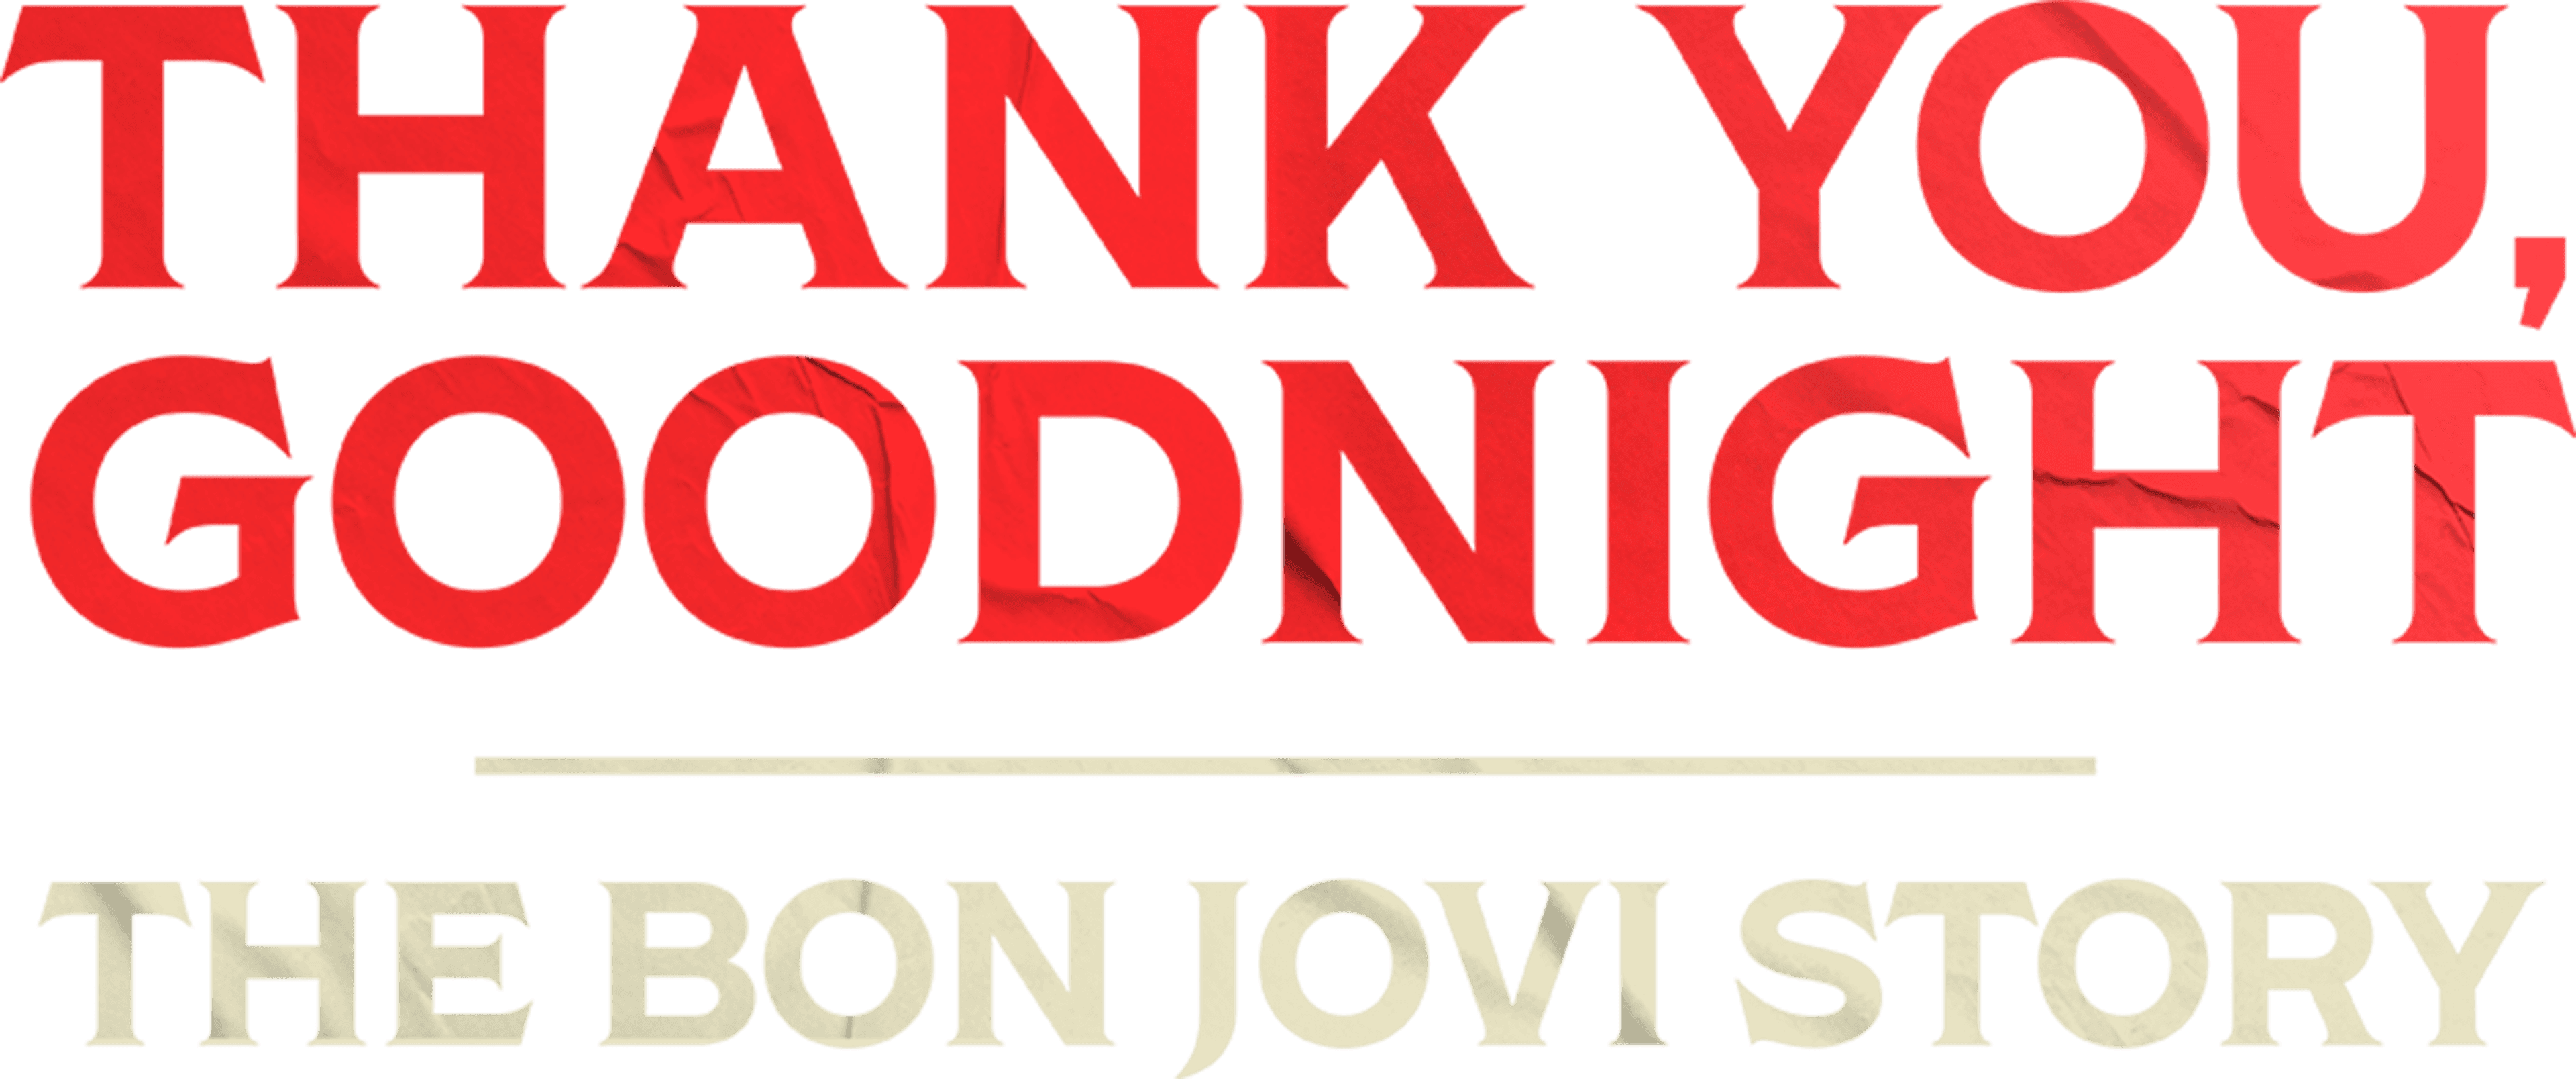 Thank You, Goodnight - The Bon Jovi Story logo